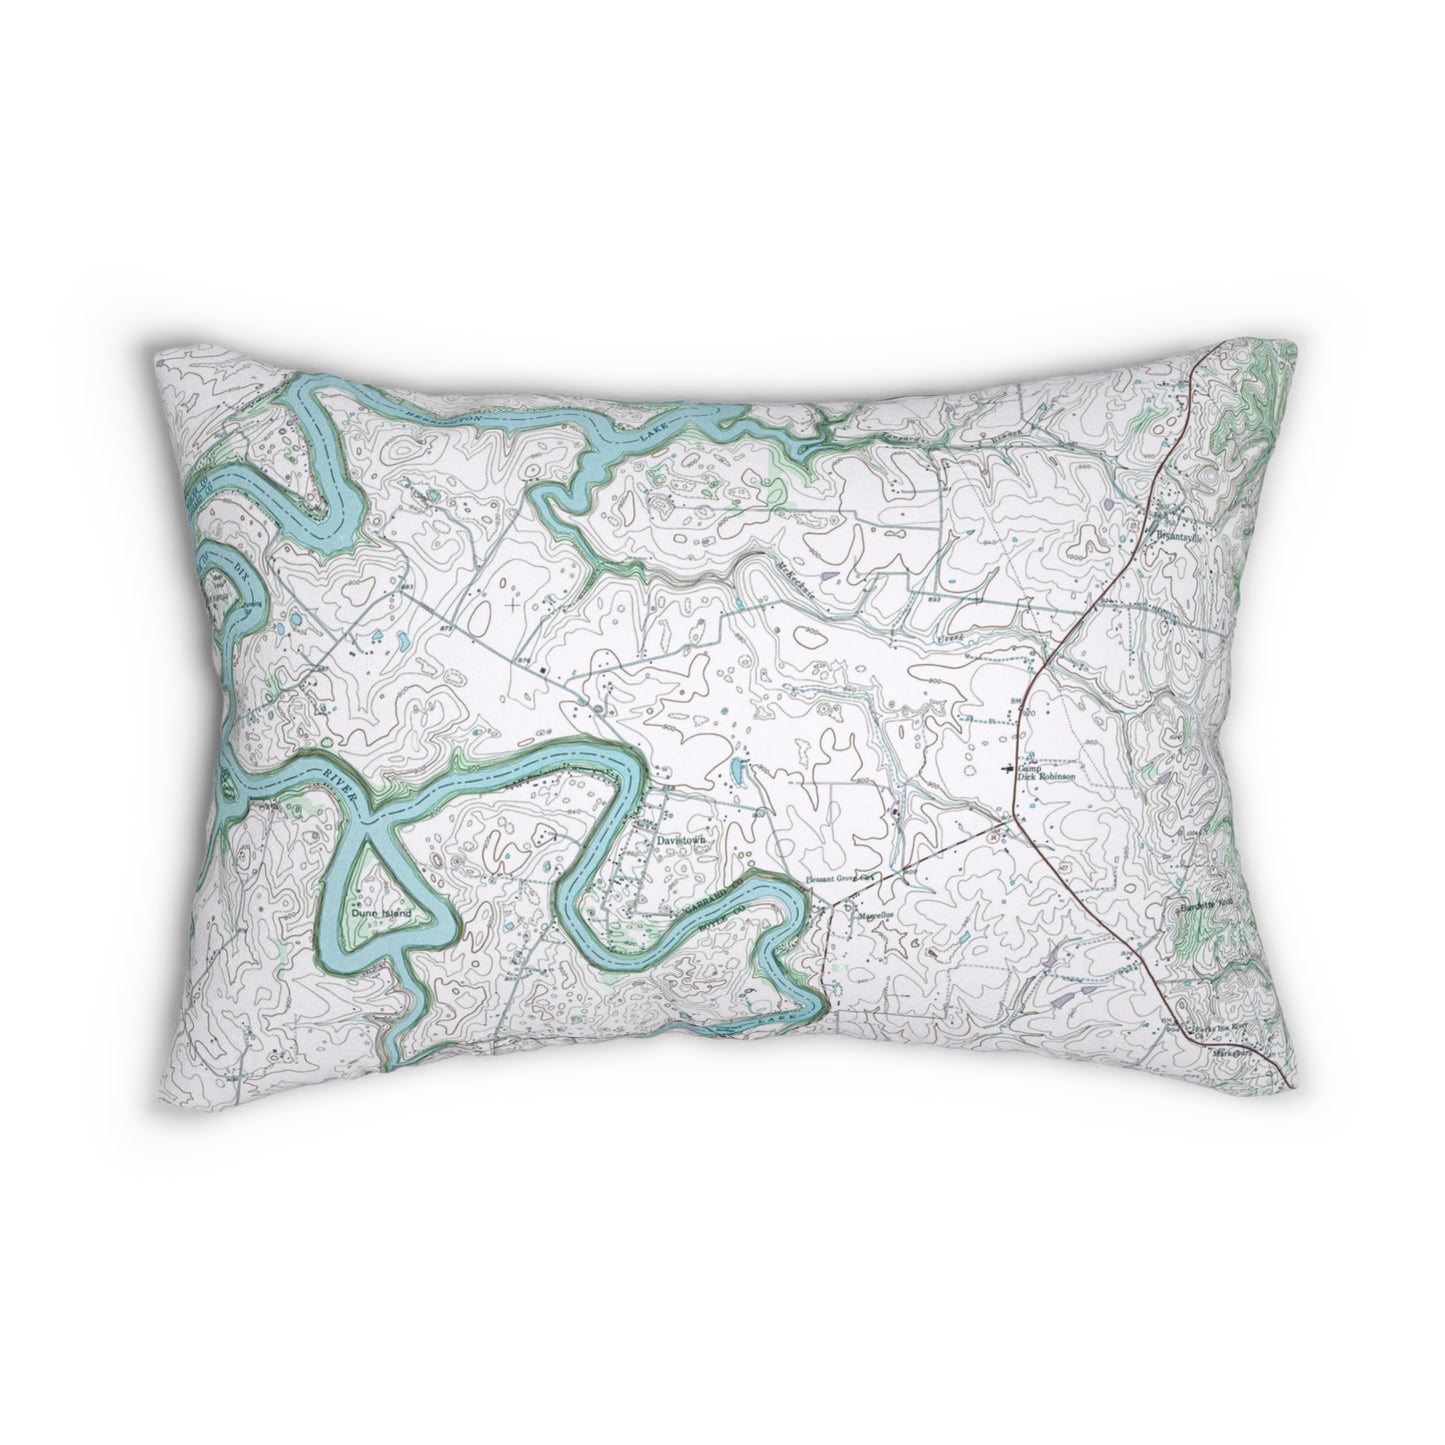 1952 USGS Topographic Map Lumbar Pillow (Blue/Green)